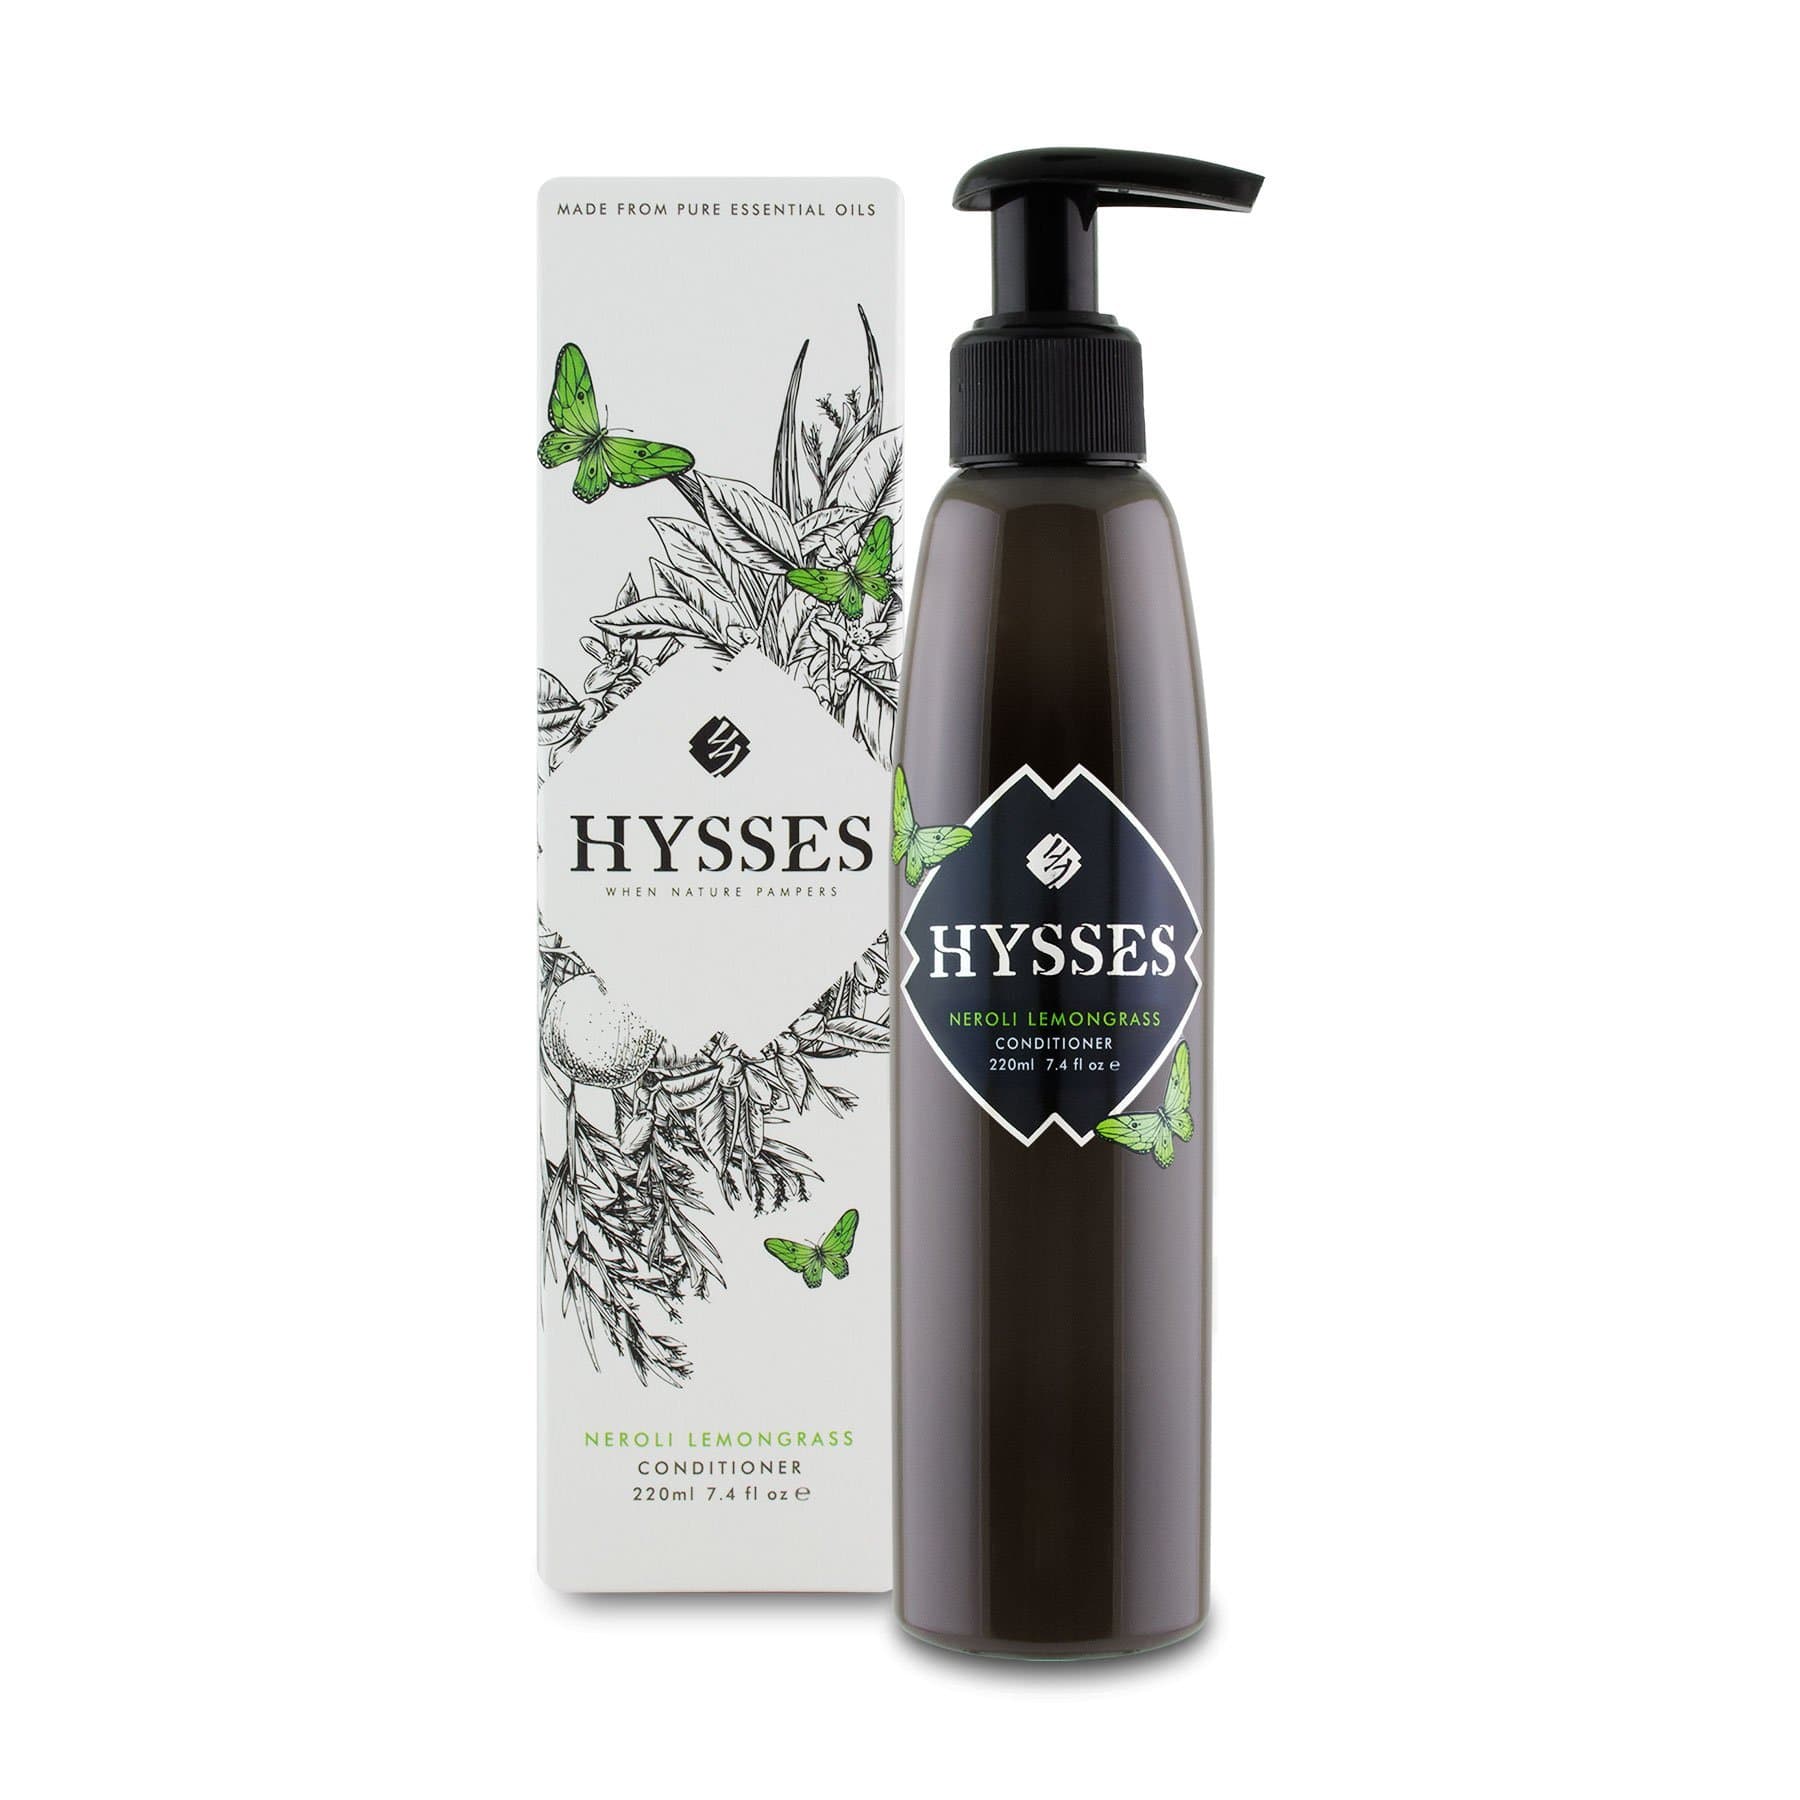 Hysses Hair Care 220ml Conditioner Neroli Lemongrass